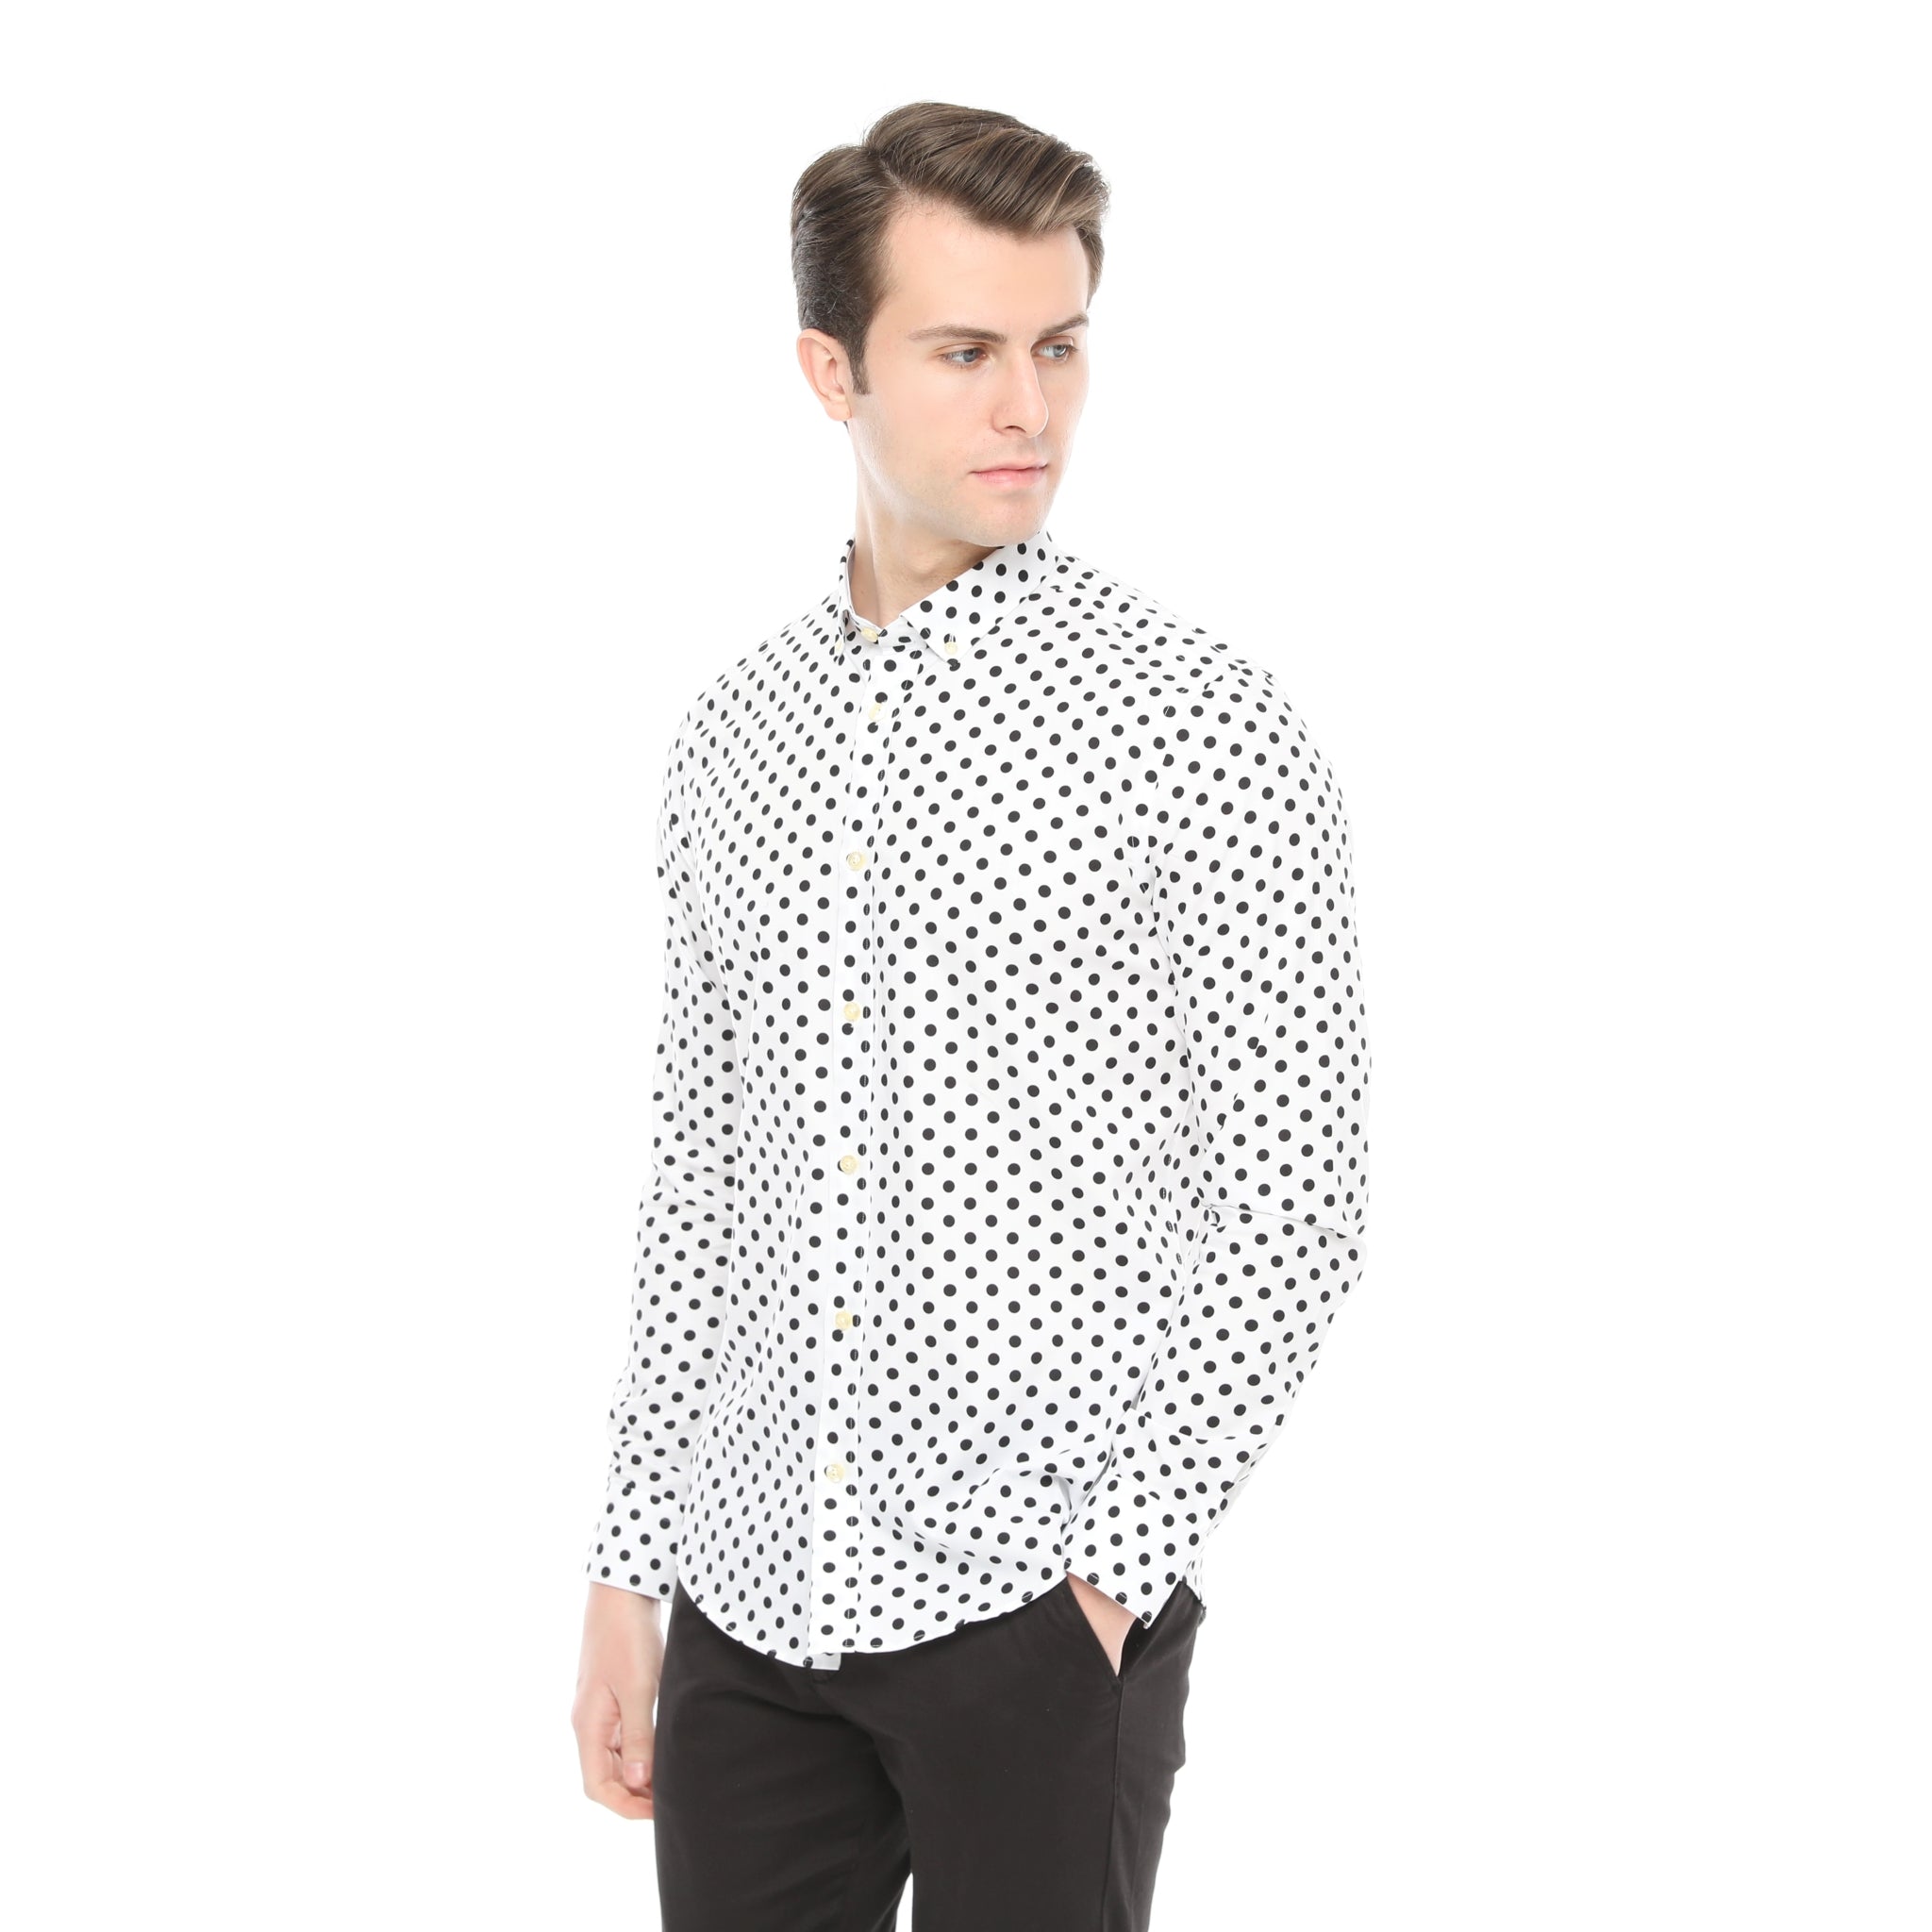 Xact Mens Polka Dot Shirt - Long Sleeved Mod Vintage-2